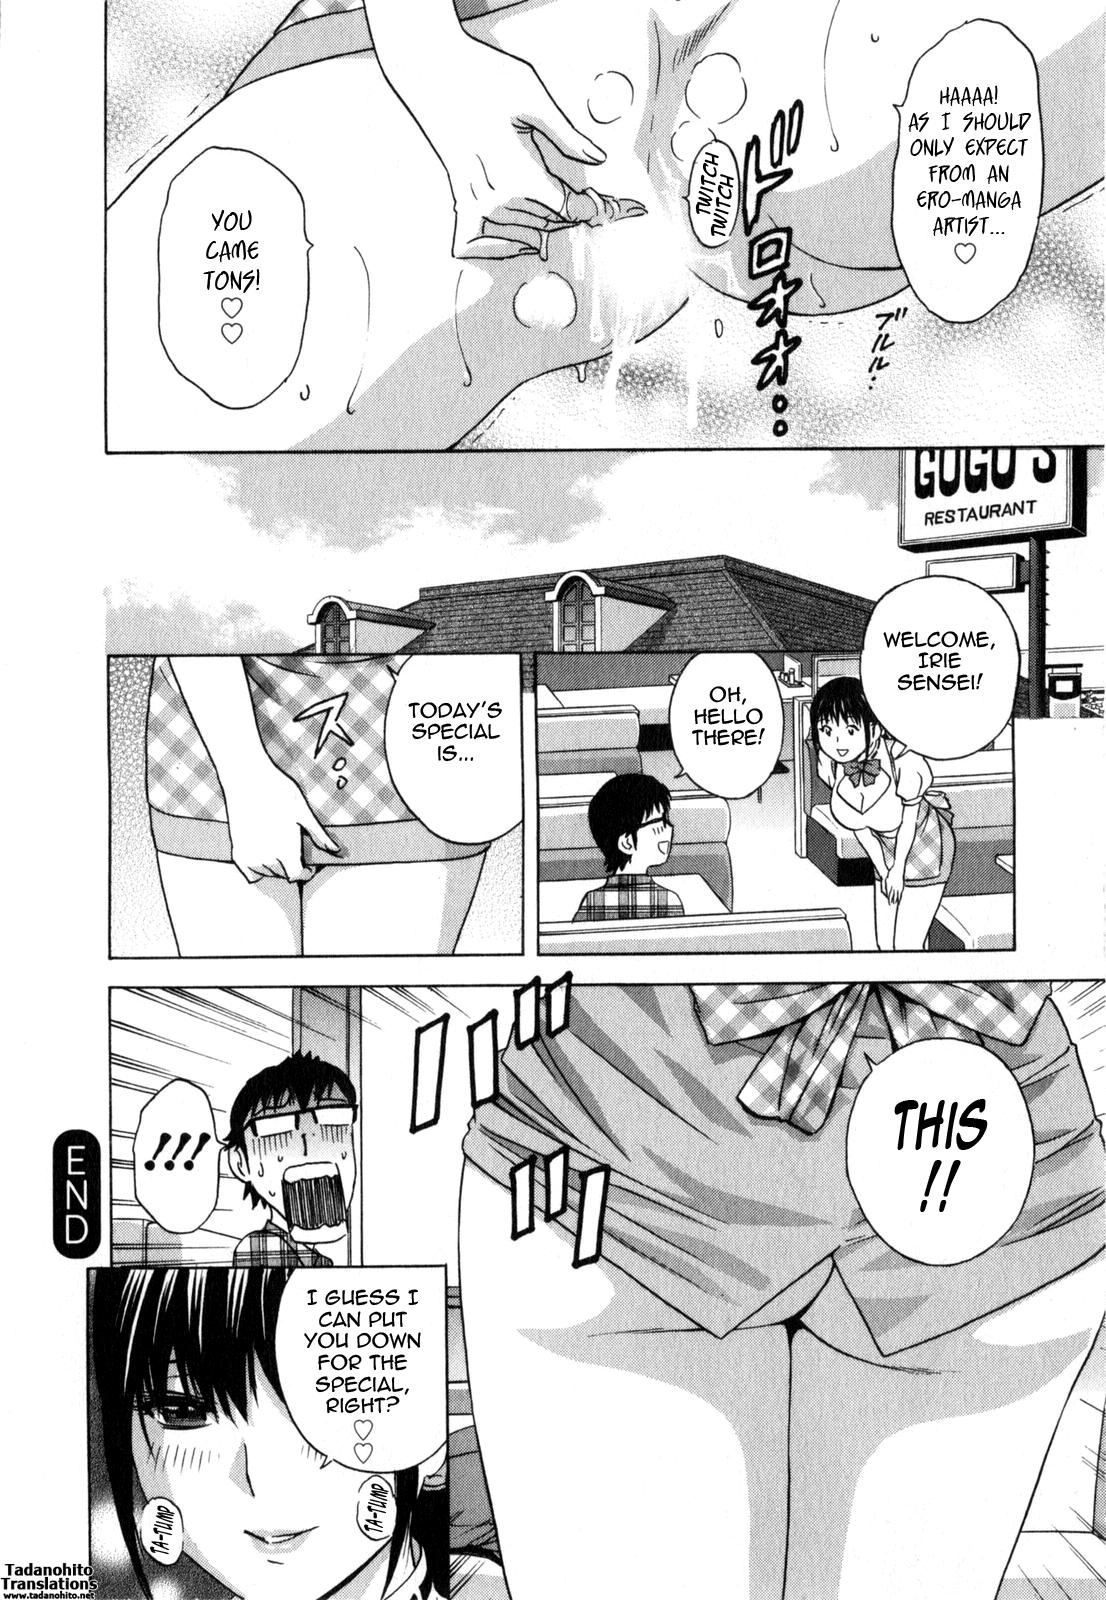 [Hidemaru] Life with Married Women Just Like a Manga 2 - Ch. 1-7 [English] {Tadanohito} 122